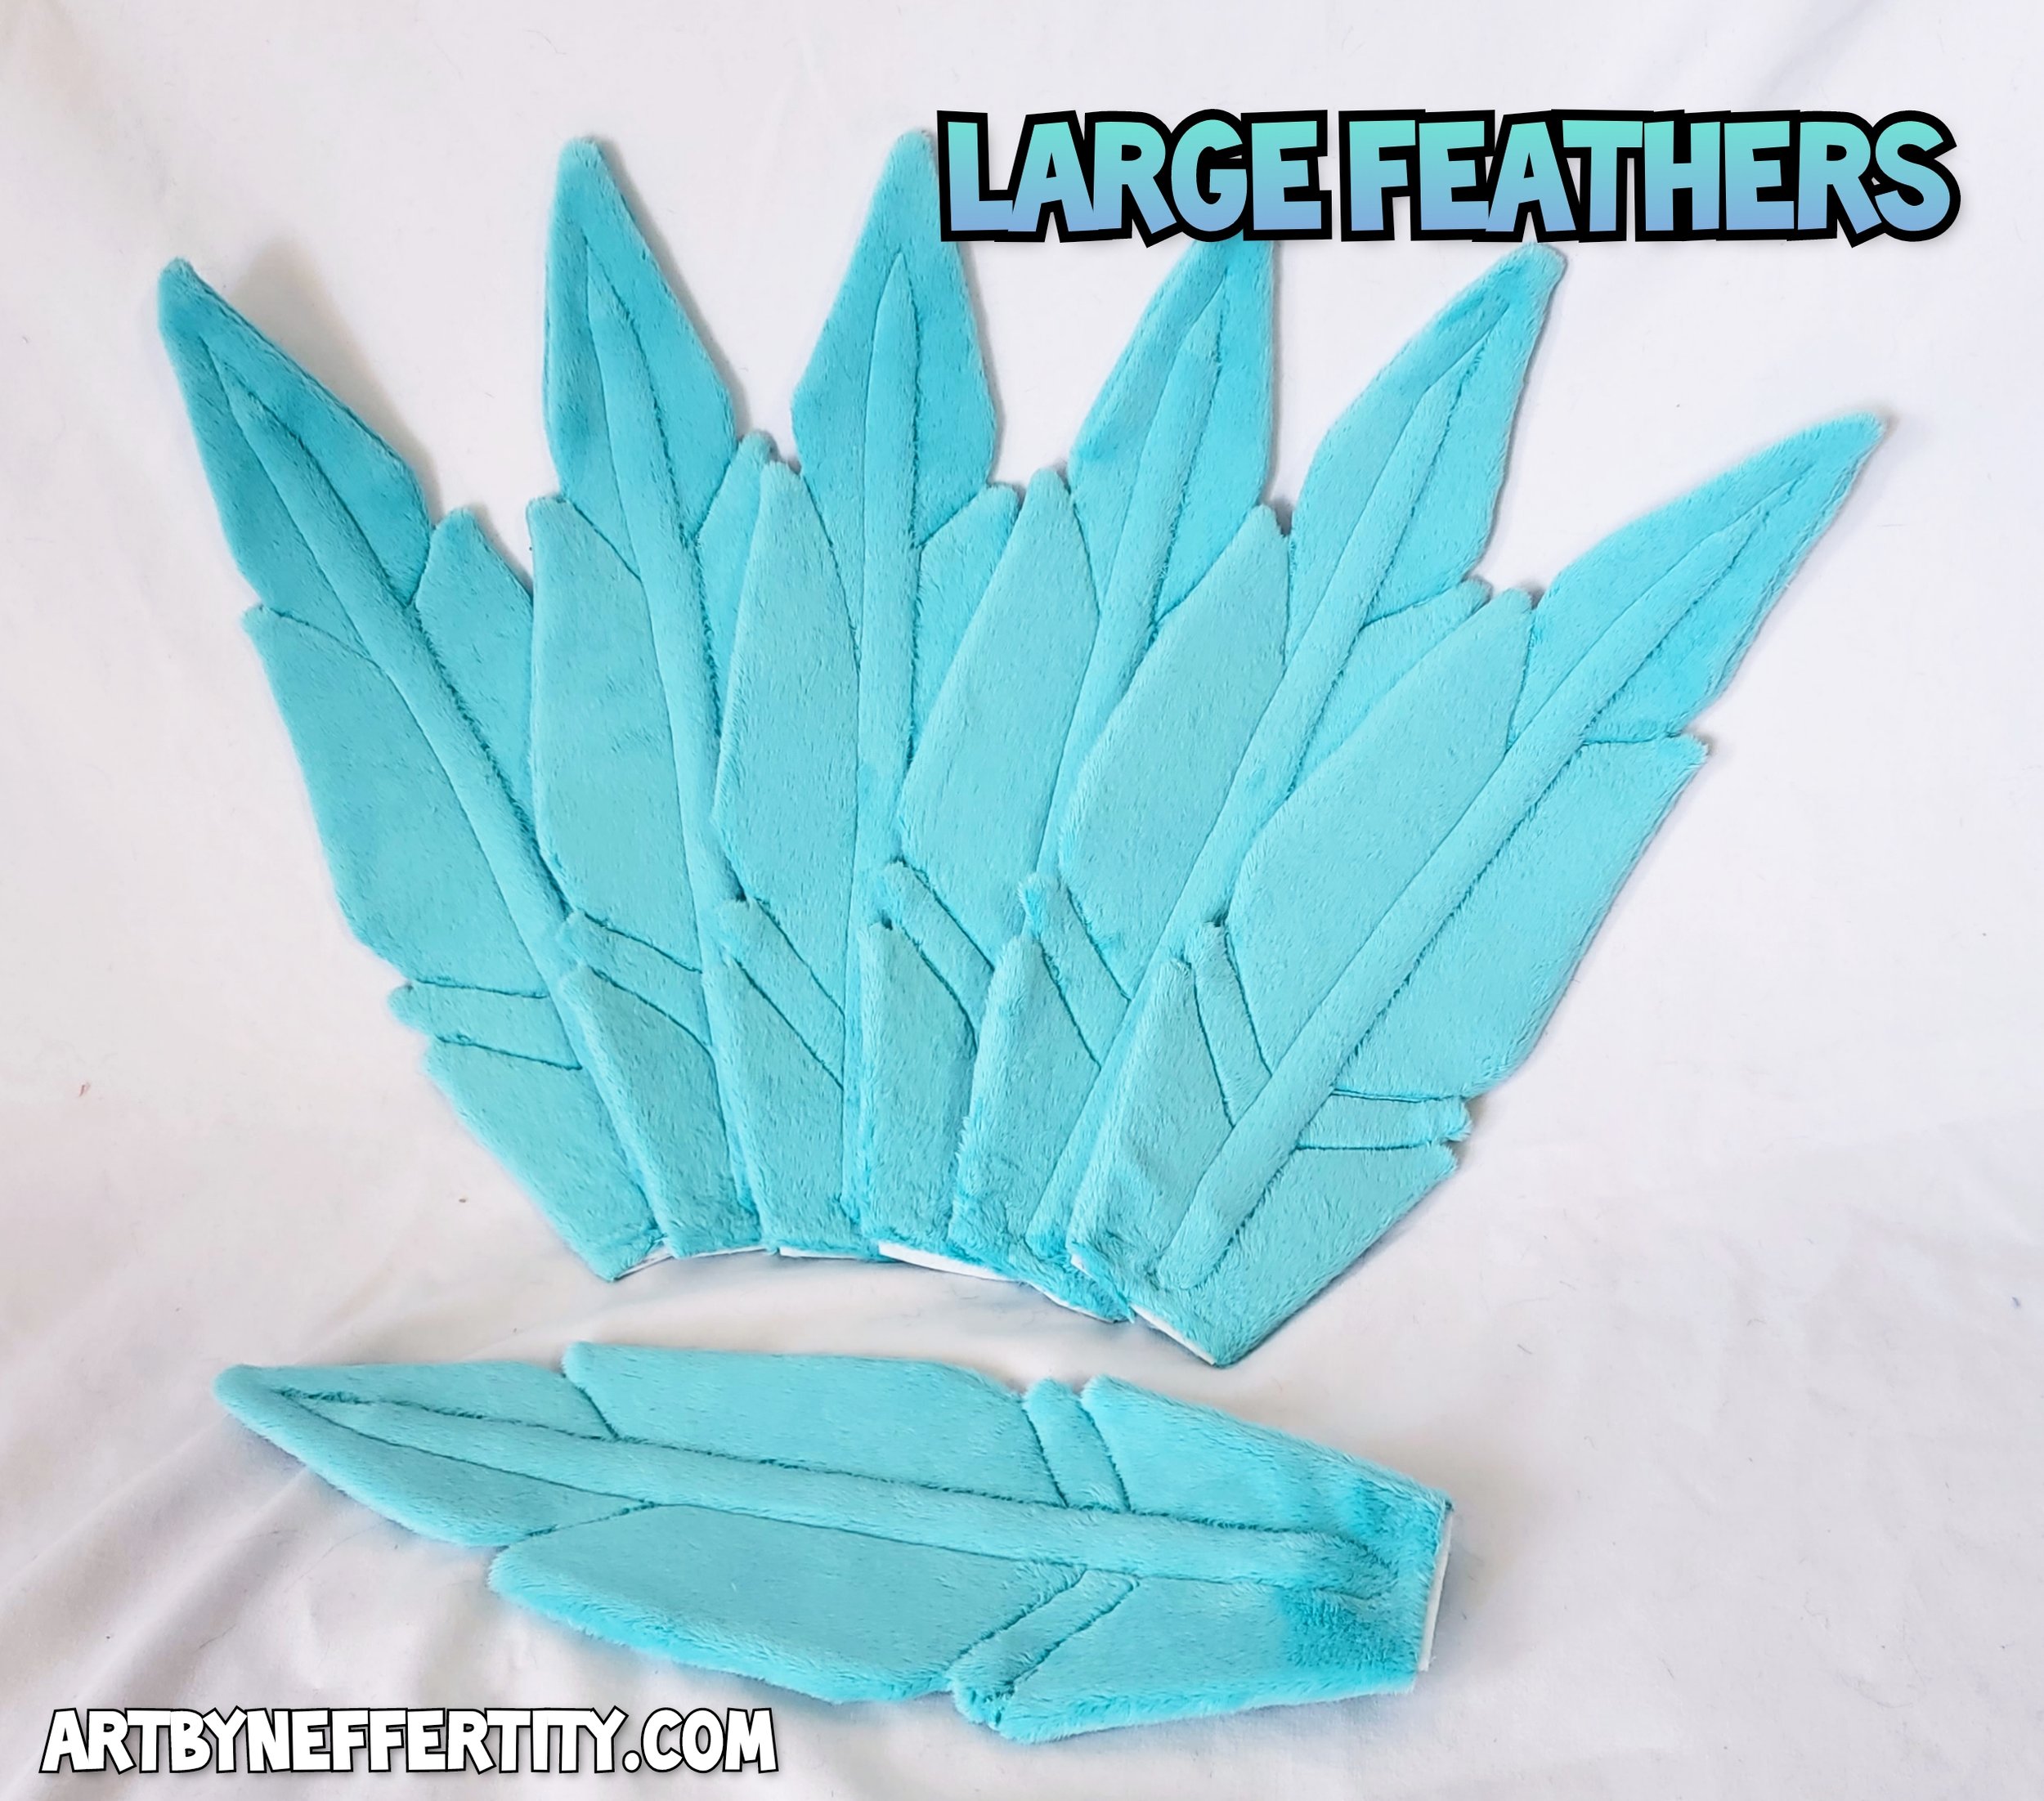 Large_Feathers.jpg